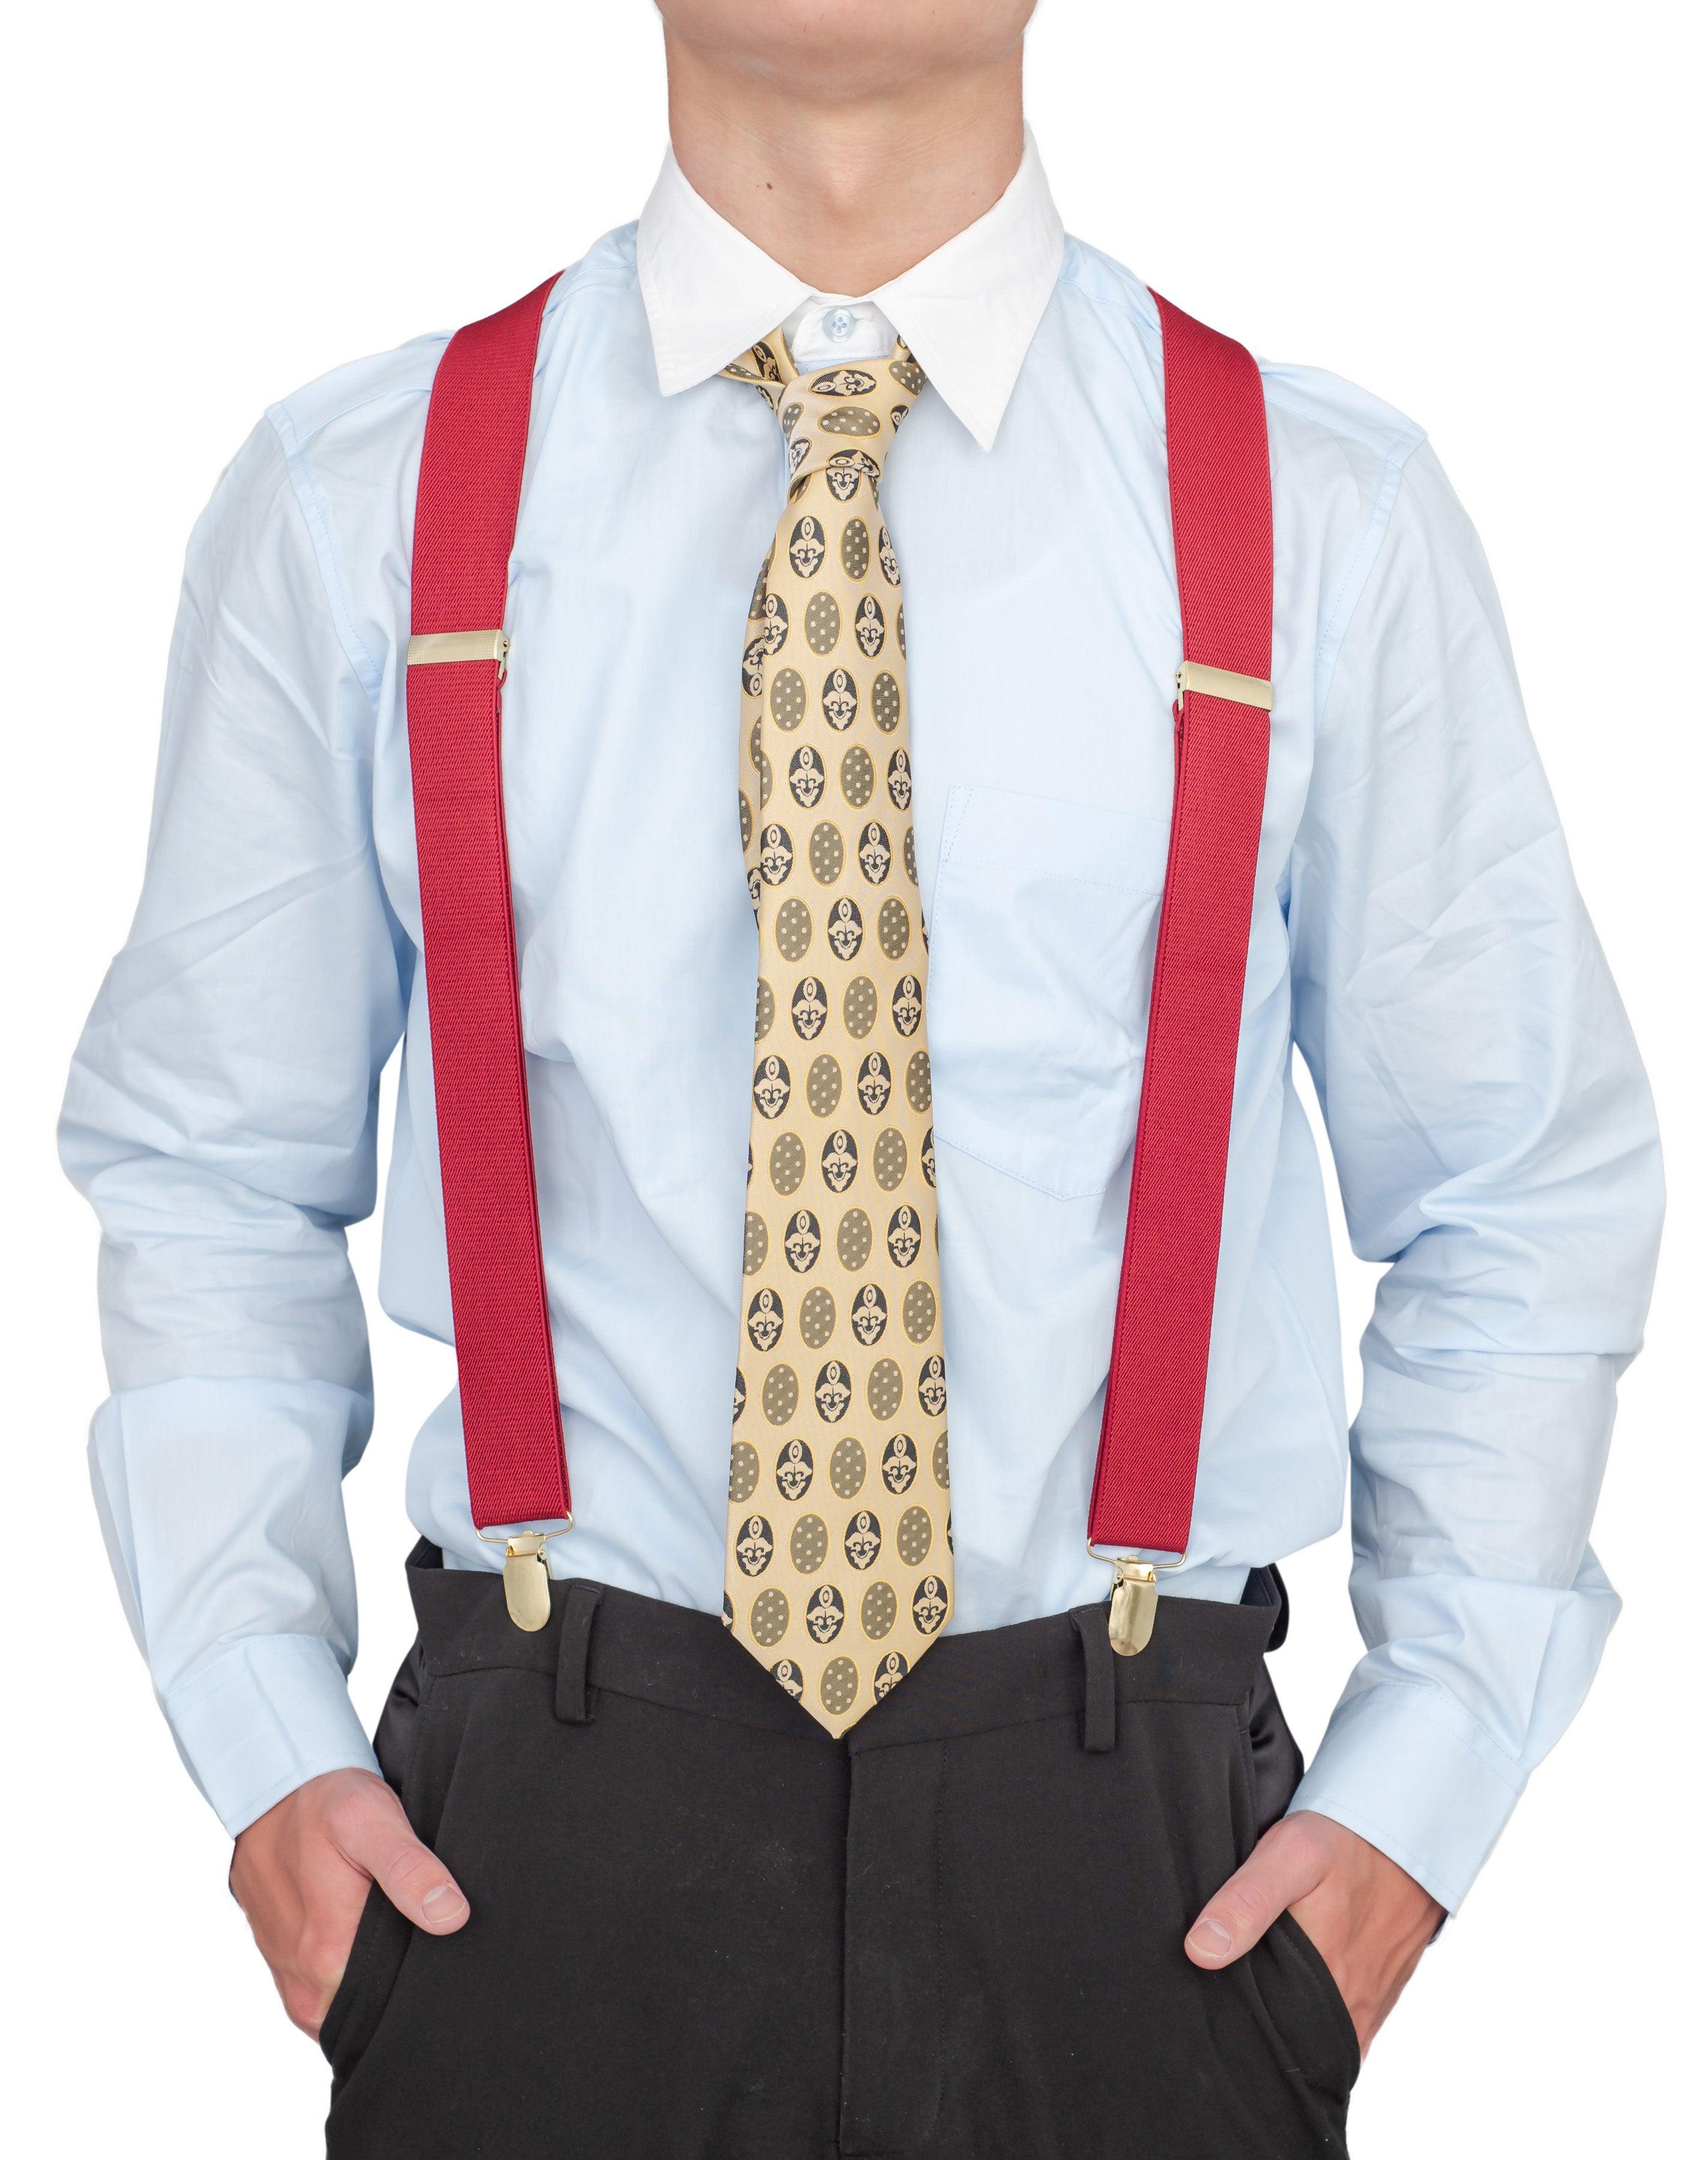 Lumbergh Mmmk Office Boss Shirt Combo Set - TVStoreOnline